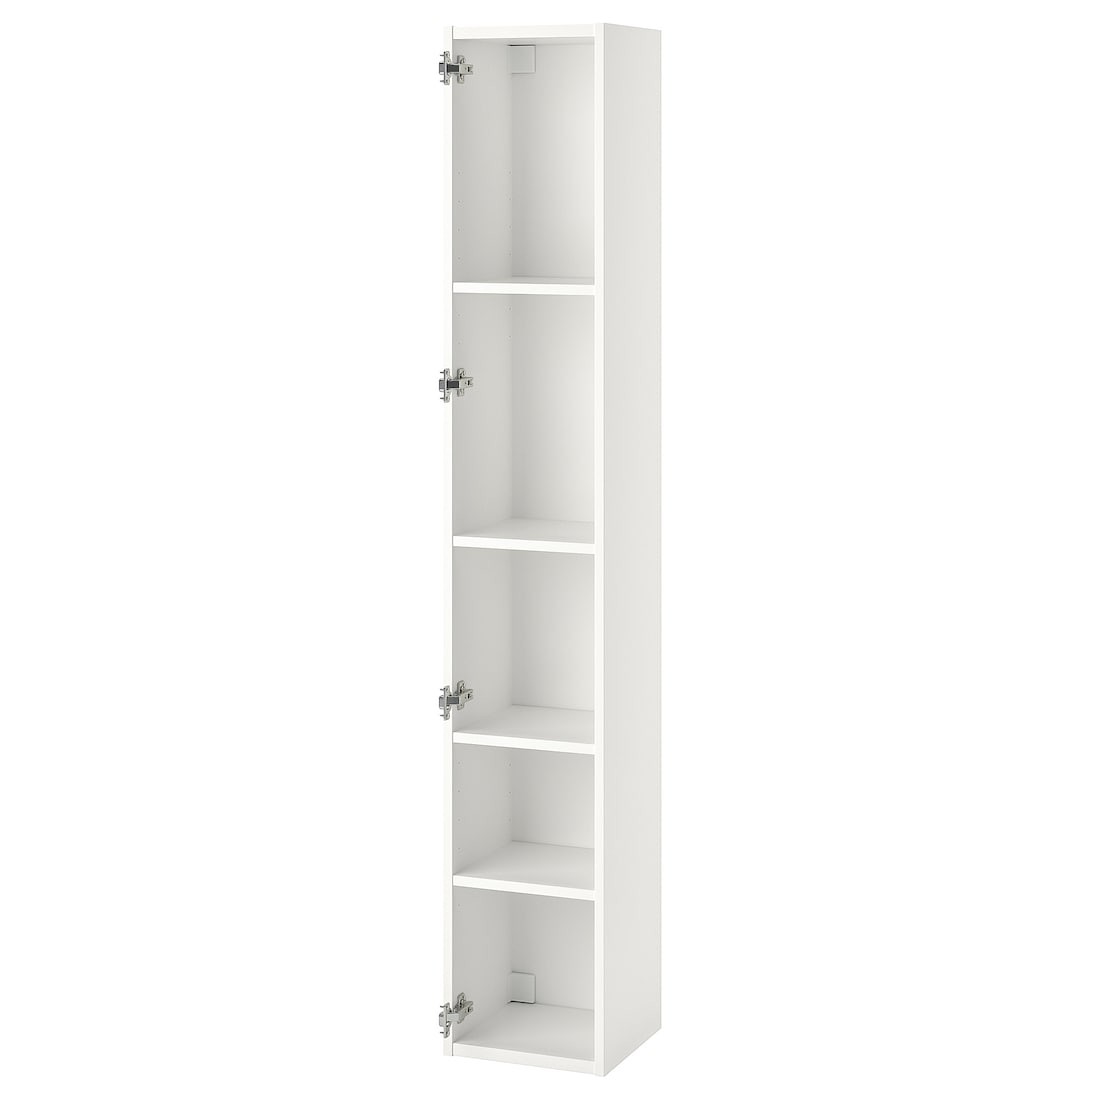 IKEA ENHET ЕНХЕТ Висока шафа 4 полички, білий, 30x30x180 см 10440452 104.404.52